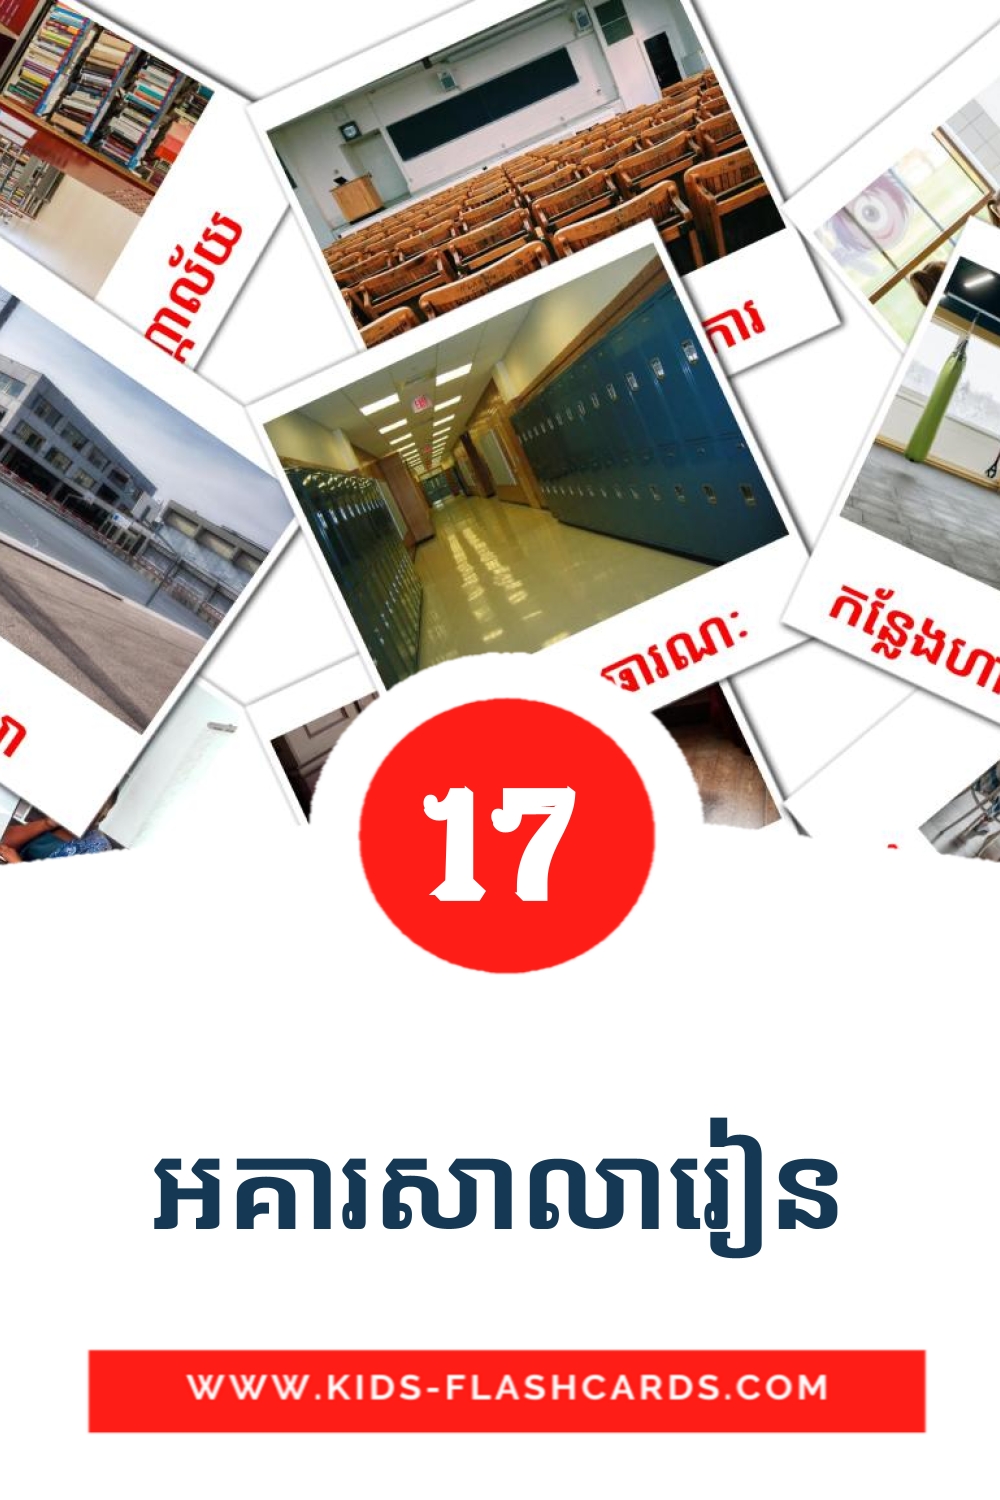 17 carte illustrate di អគារសាលារៀន per la scuola materna in khmer